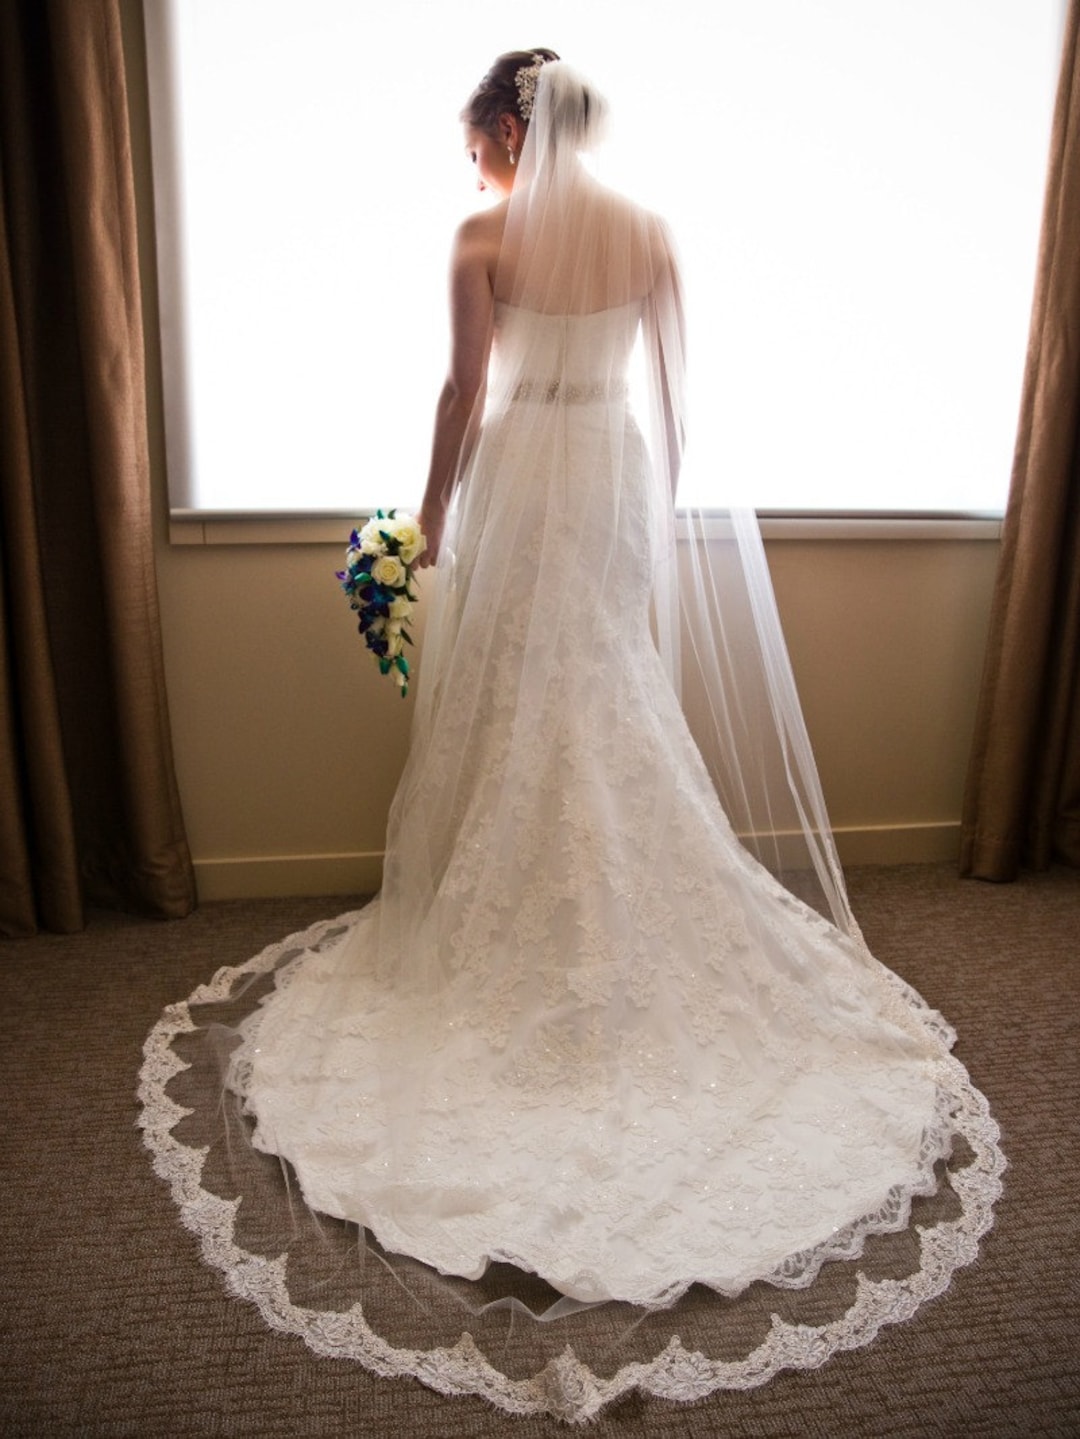 One Blushing Bride Chapel Length Wedding Veil, Simple Raw Edge Bridal Veil, White / Ivory Blush / Cathedral Length